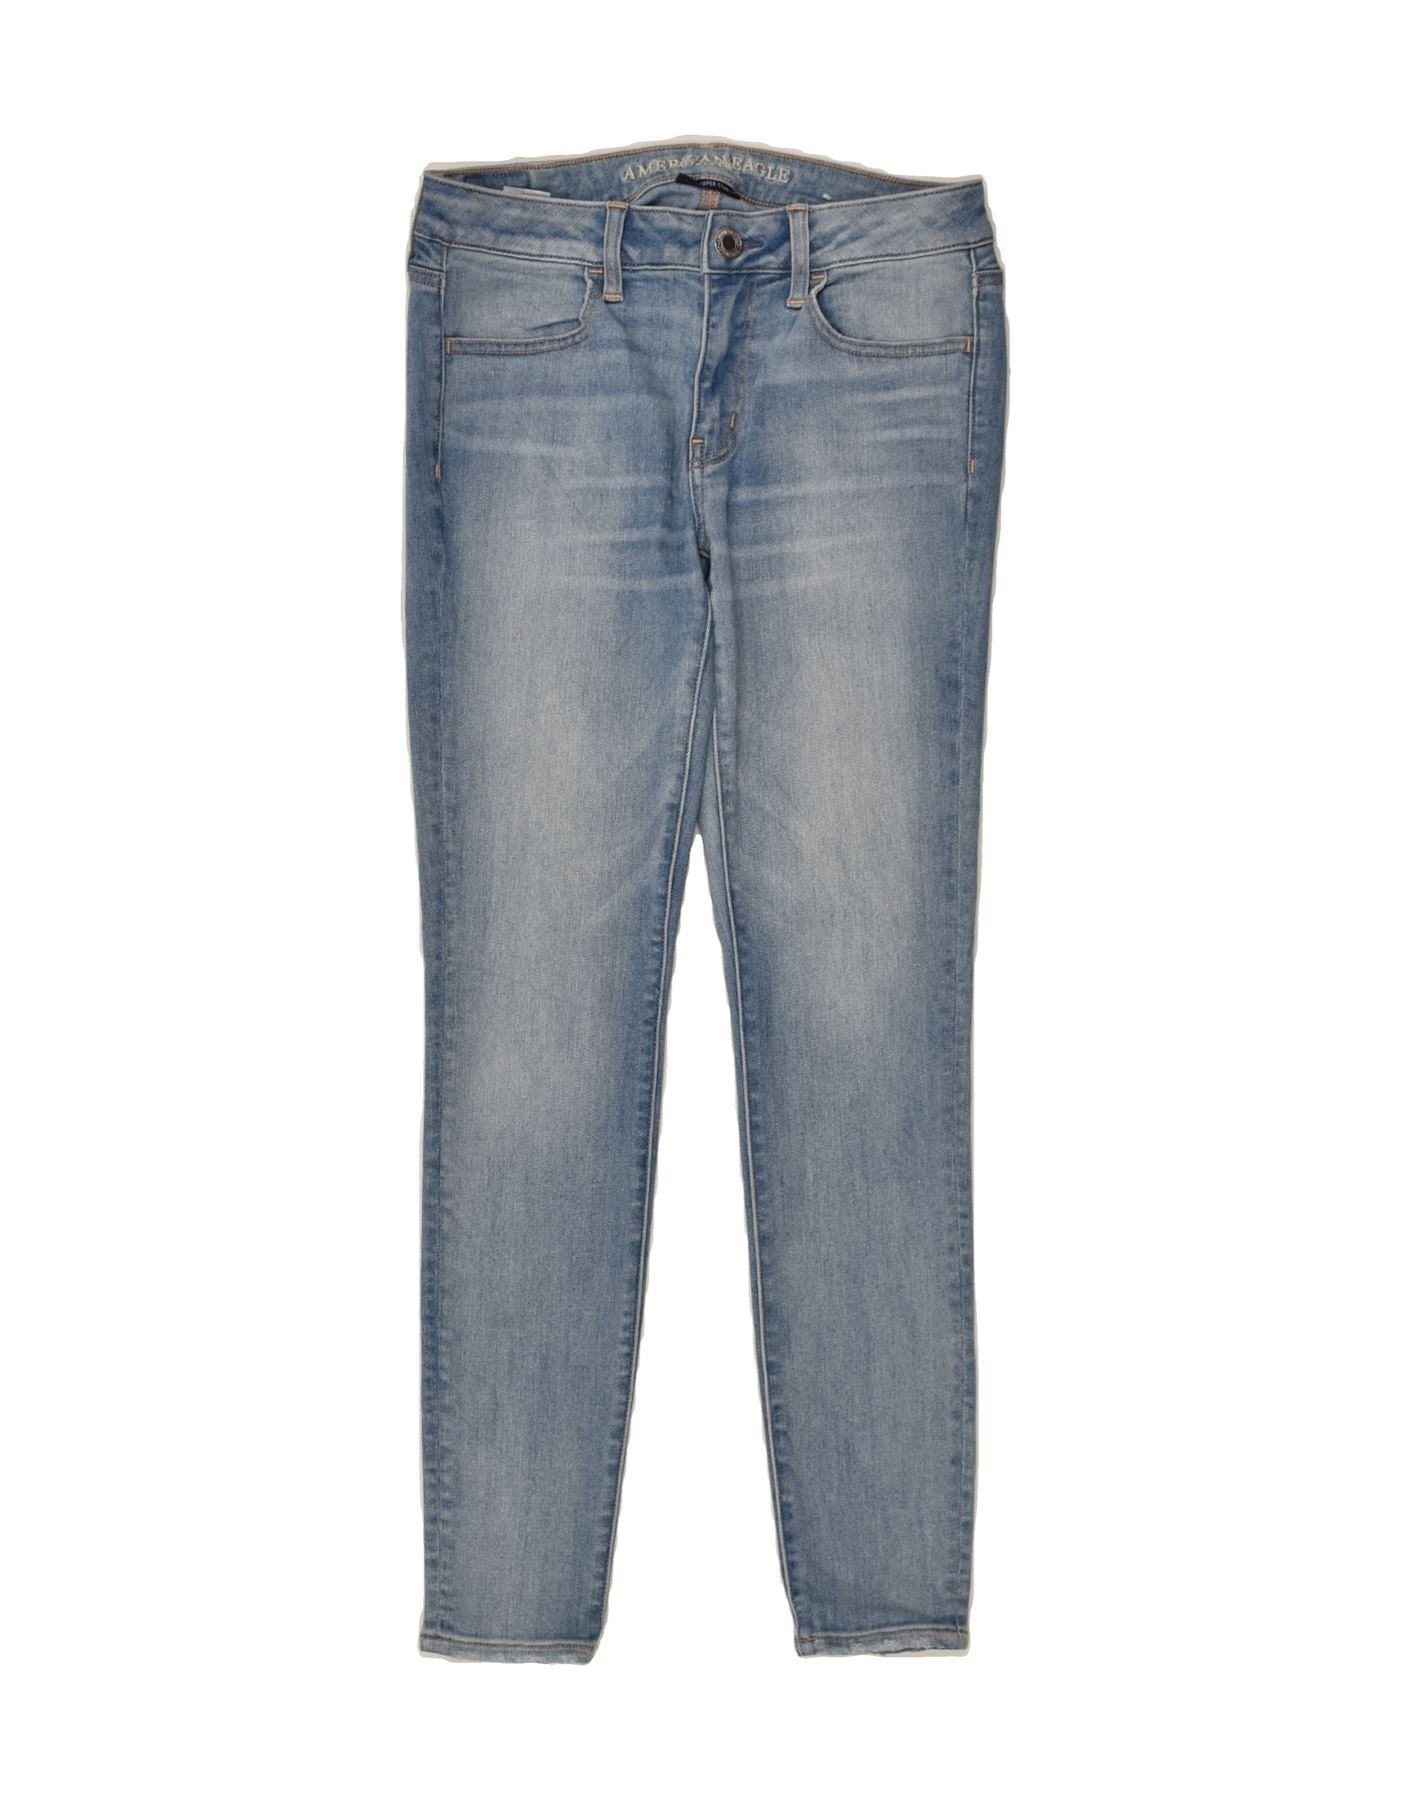 AMERICAN EAGLE Womens Jegging Jeans US 8 Medium W29 L28 Blue Cotton